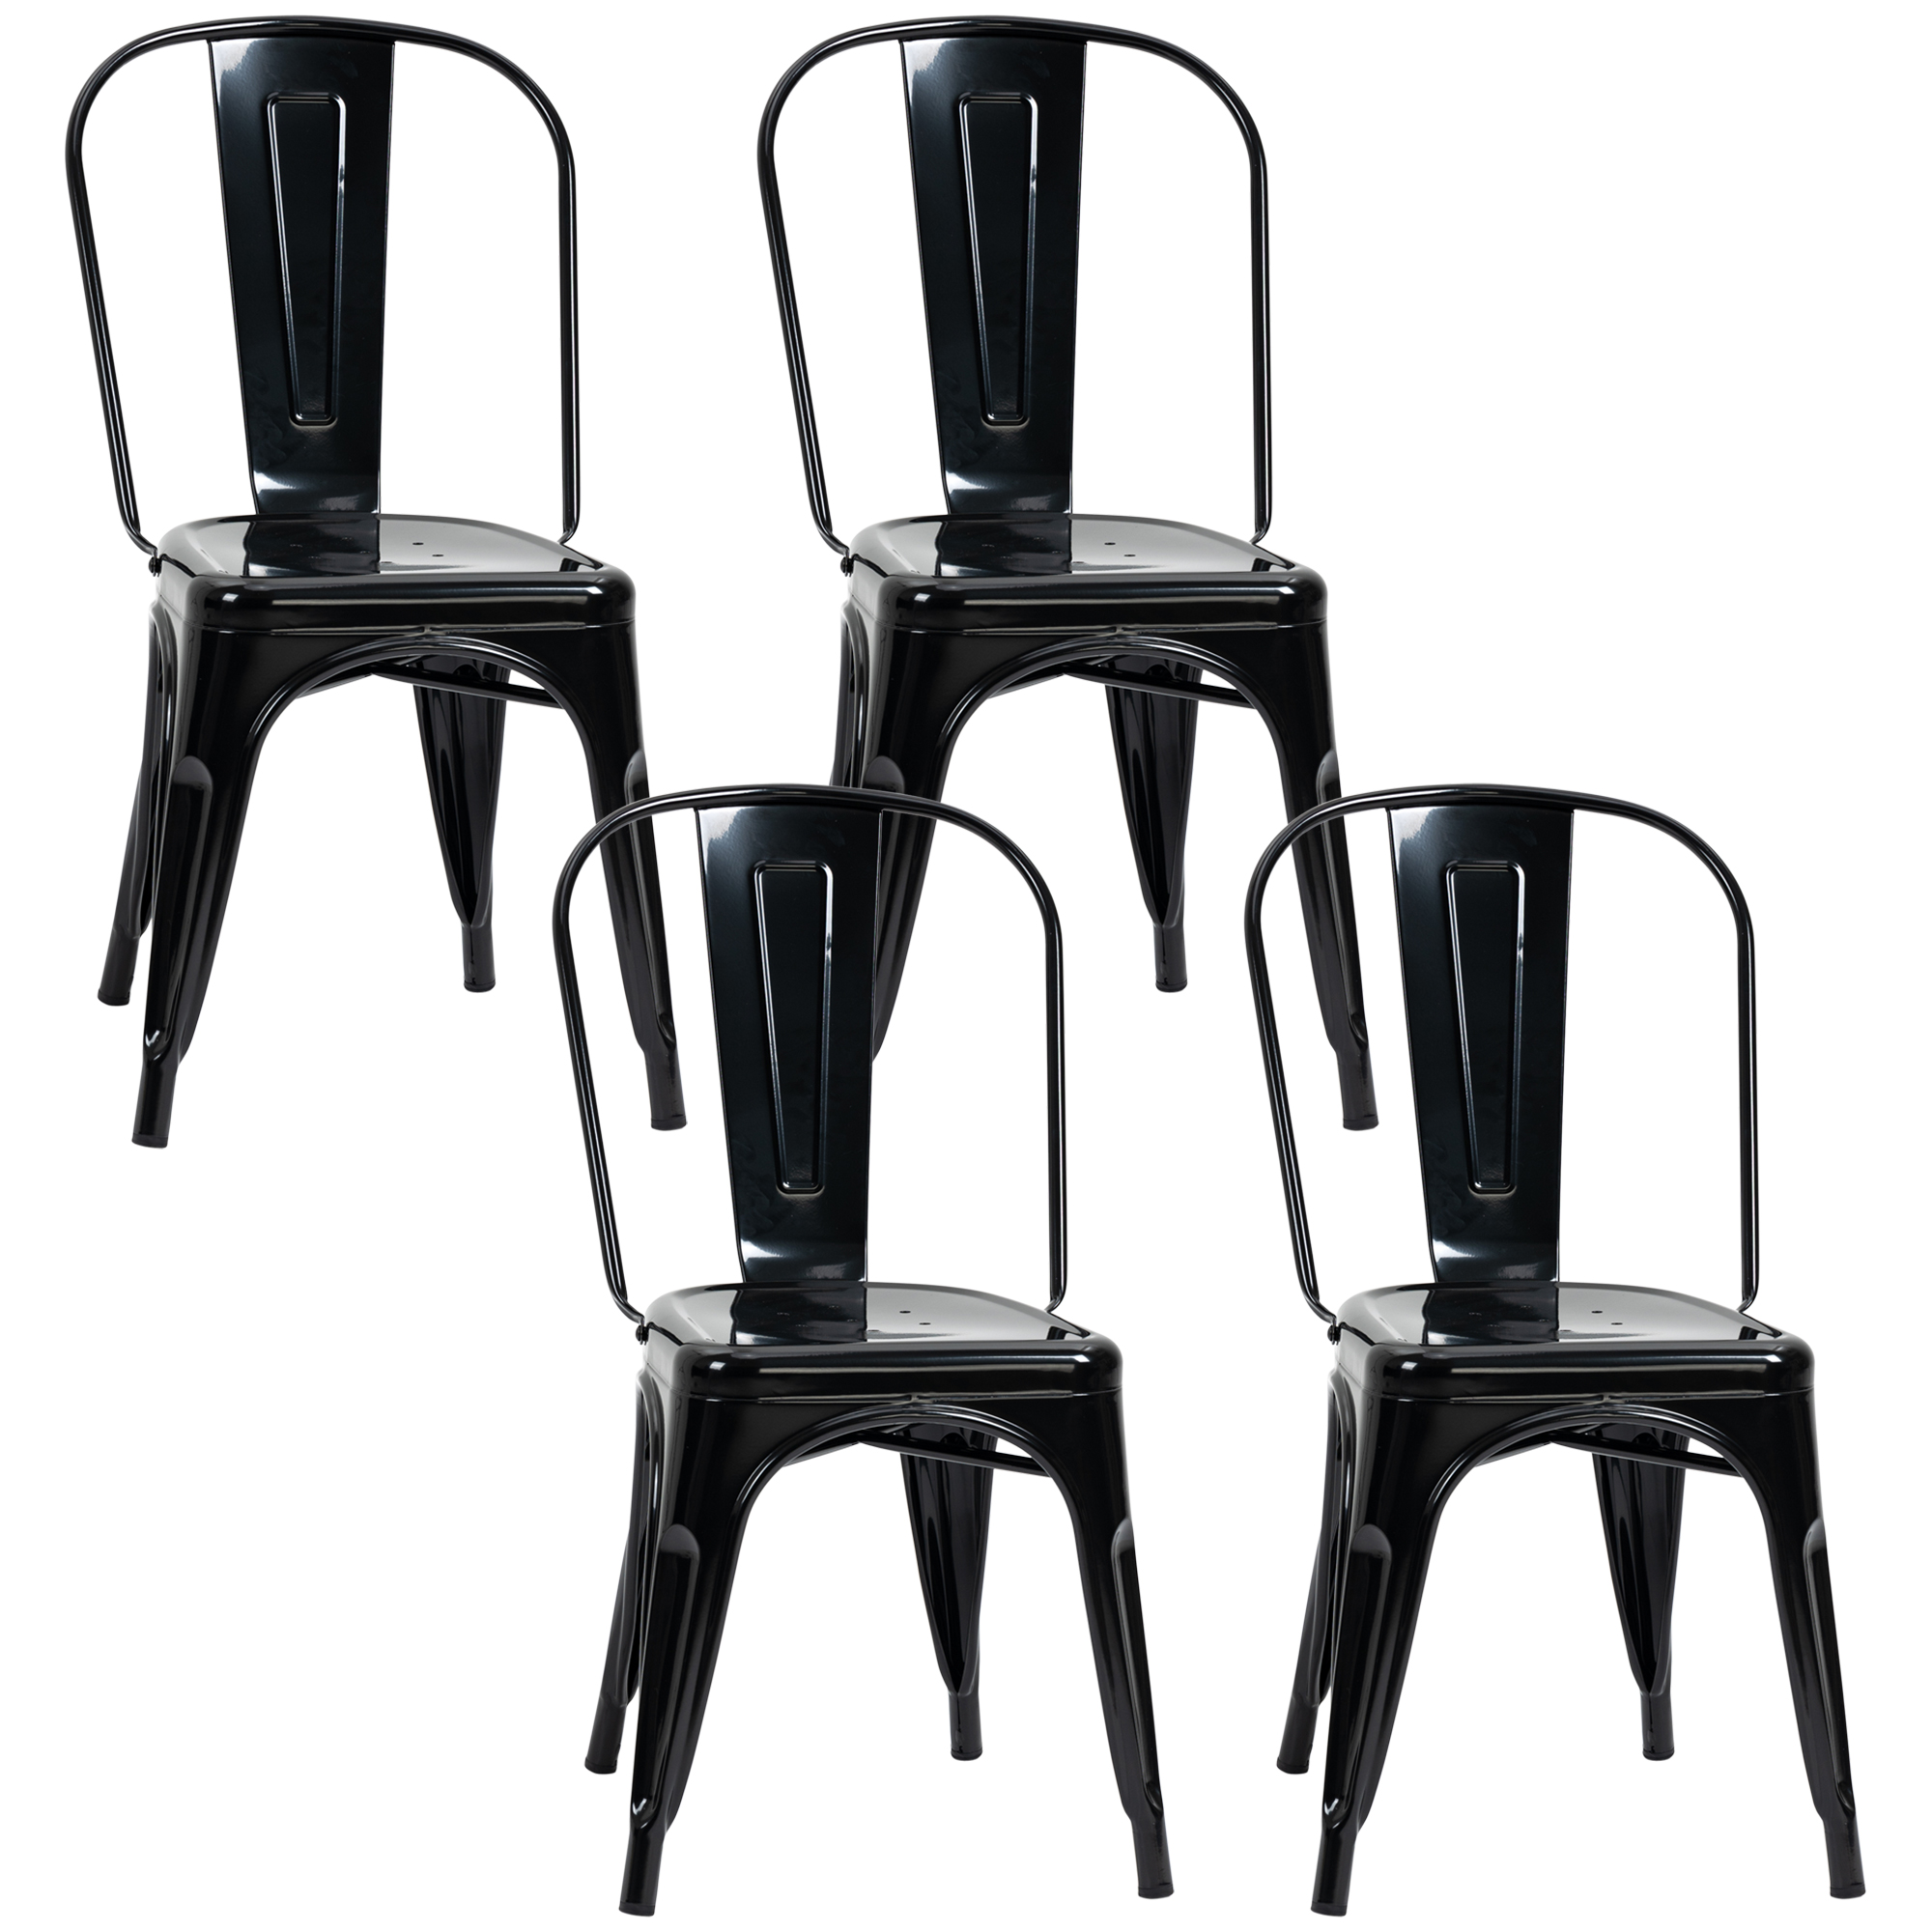 HOMCOM Σετ με 4 στοιβαζόμενες καρέκλες κουζίνας βιομηχανικού στυλ